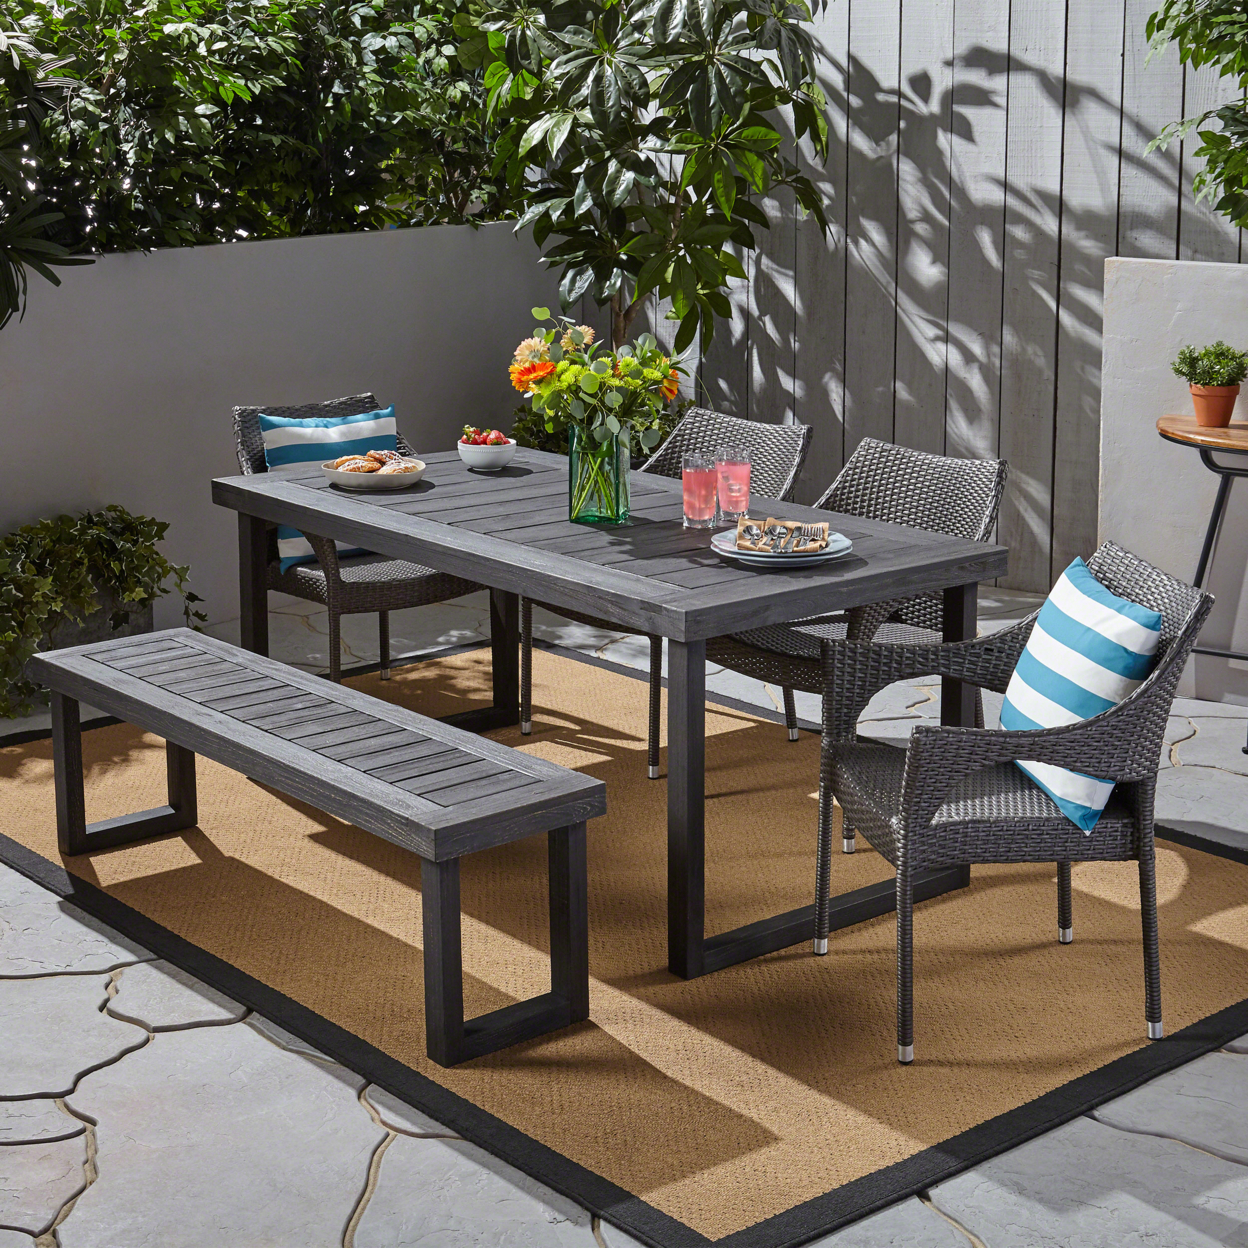 Alva Outdoor 6-Seater Aluminum Dining Set With Wicker Chairs And Bench - Sandblast Dark Grey + Gray